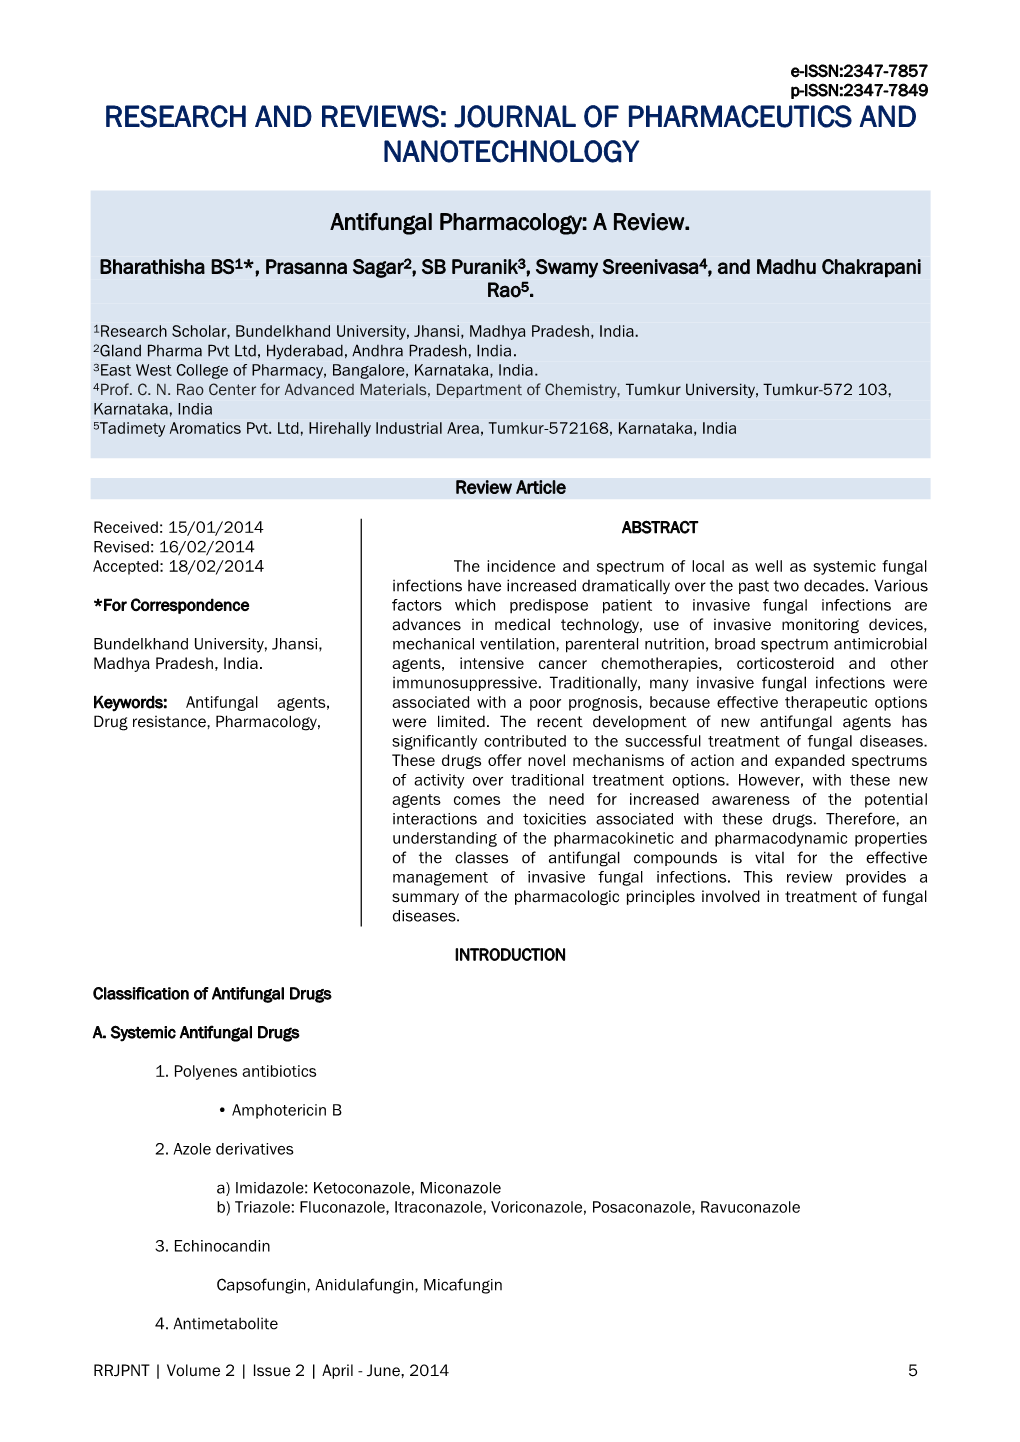 Journal of Pharmaceutics and Nanotechnology